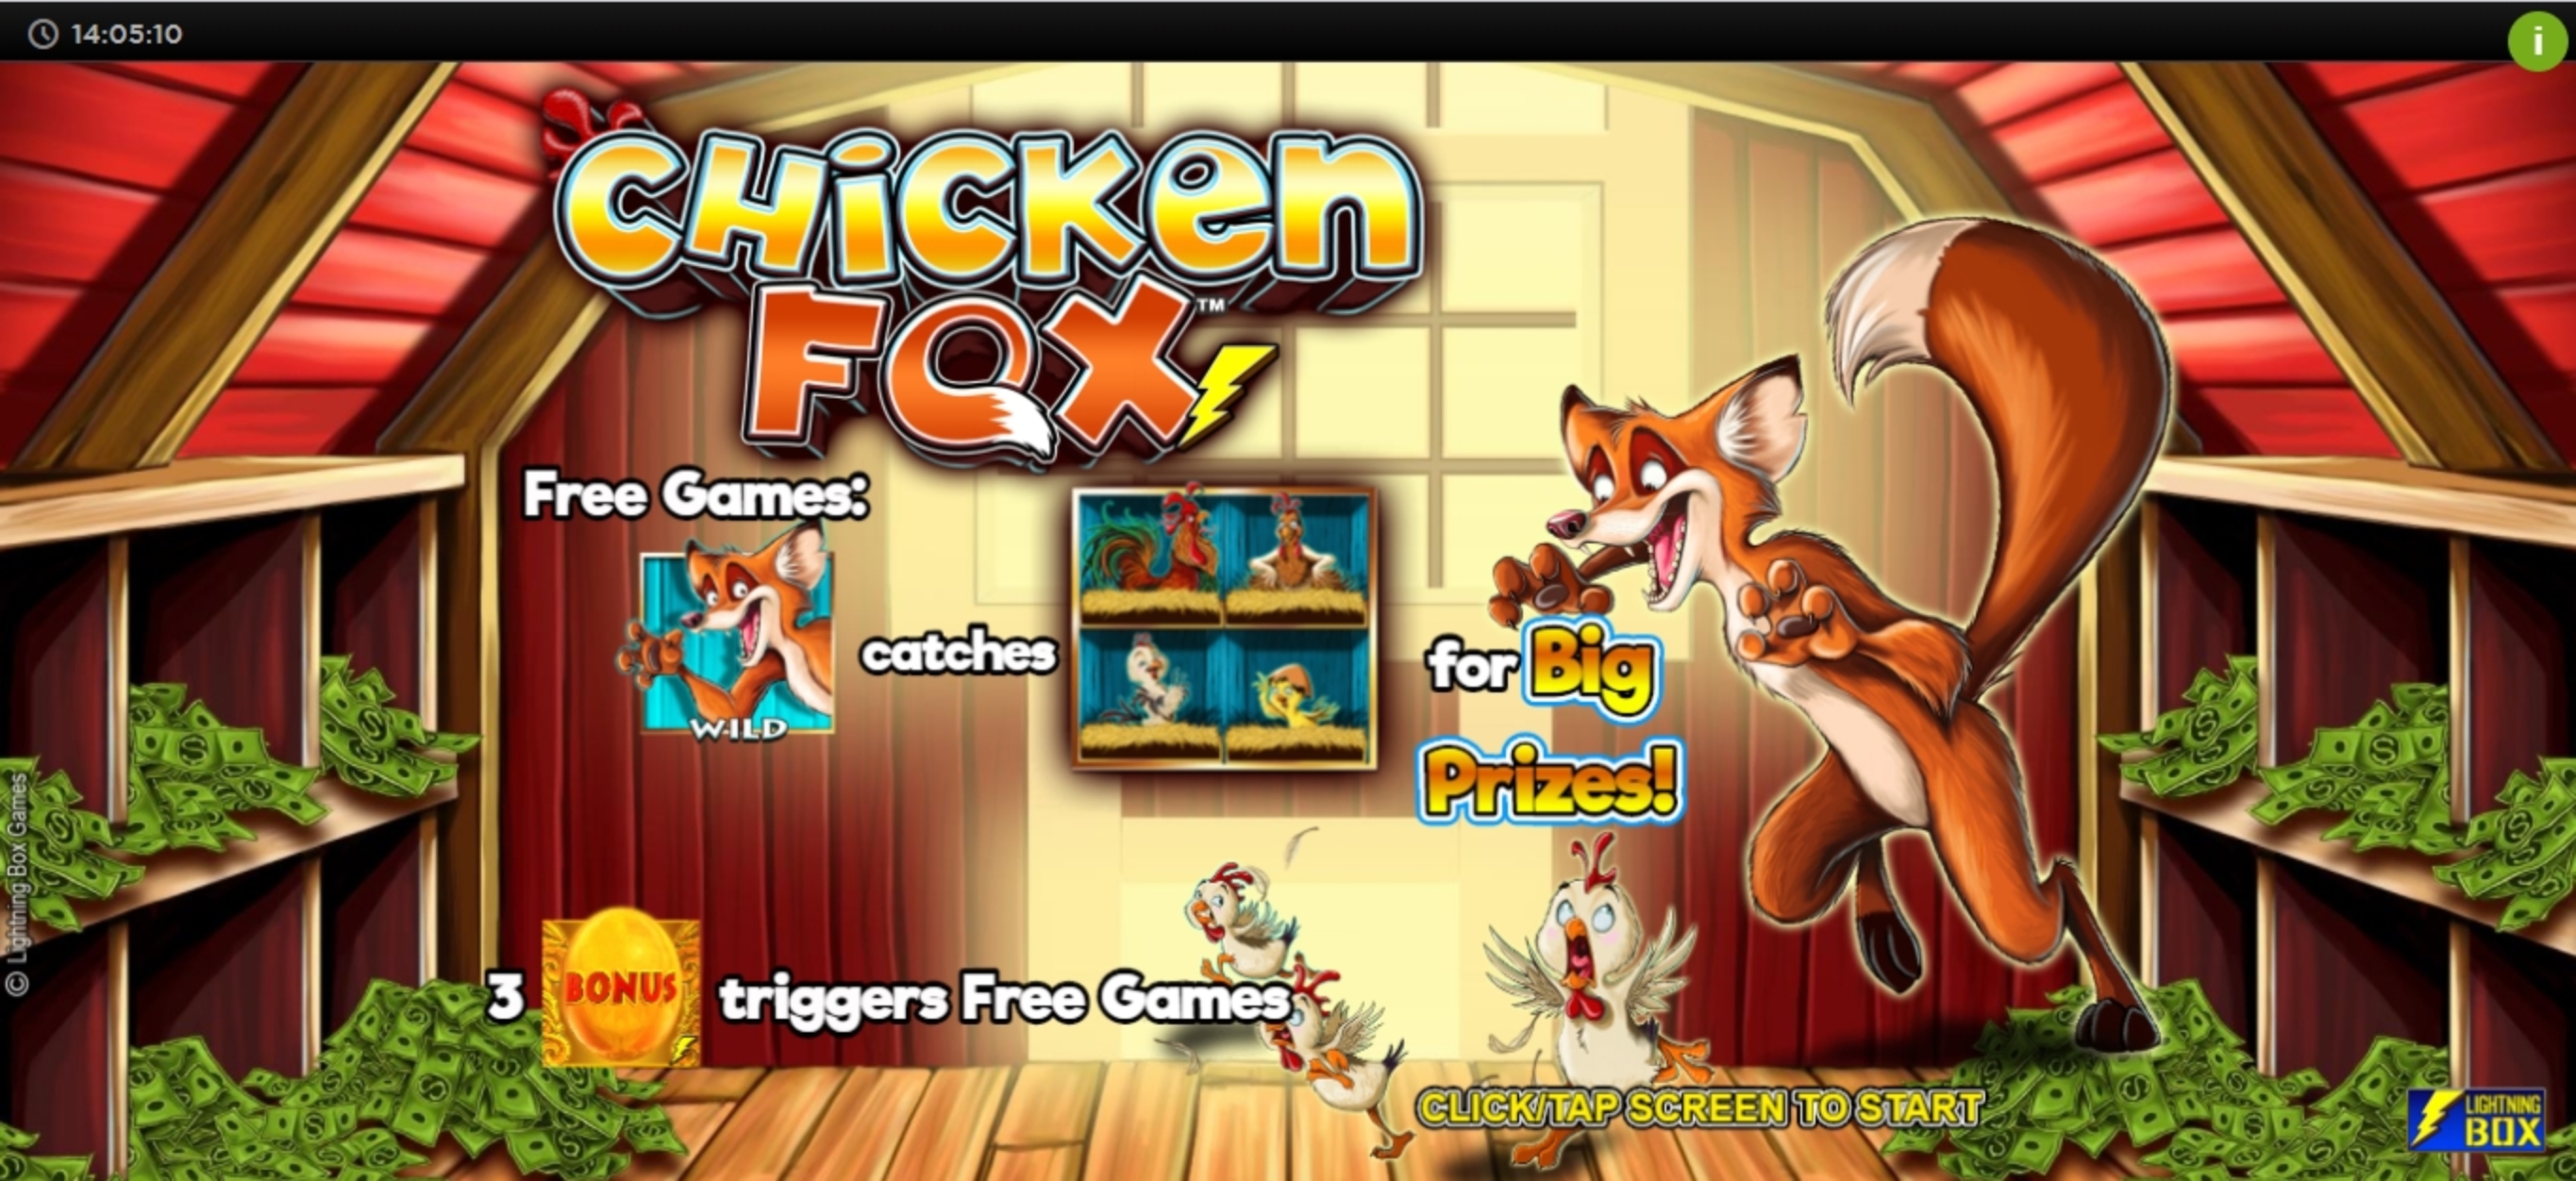 Play Chicken Fox Free Casino Slot Game by Lightning Box